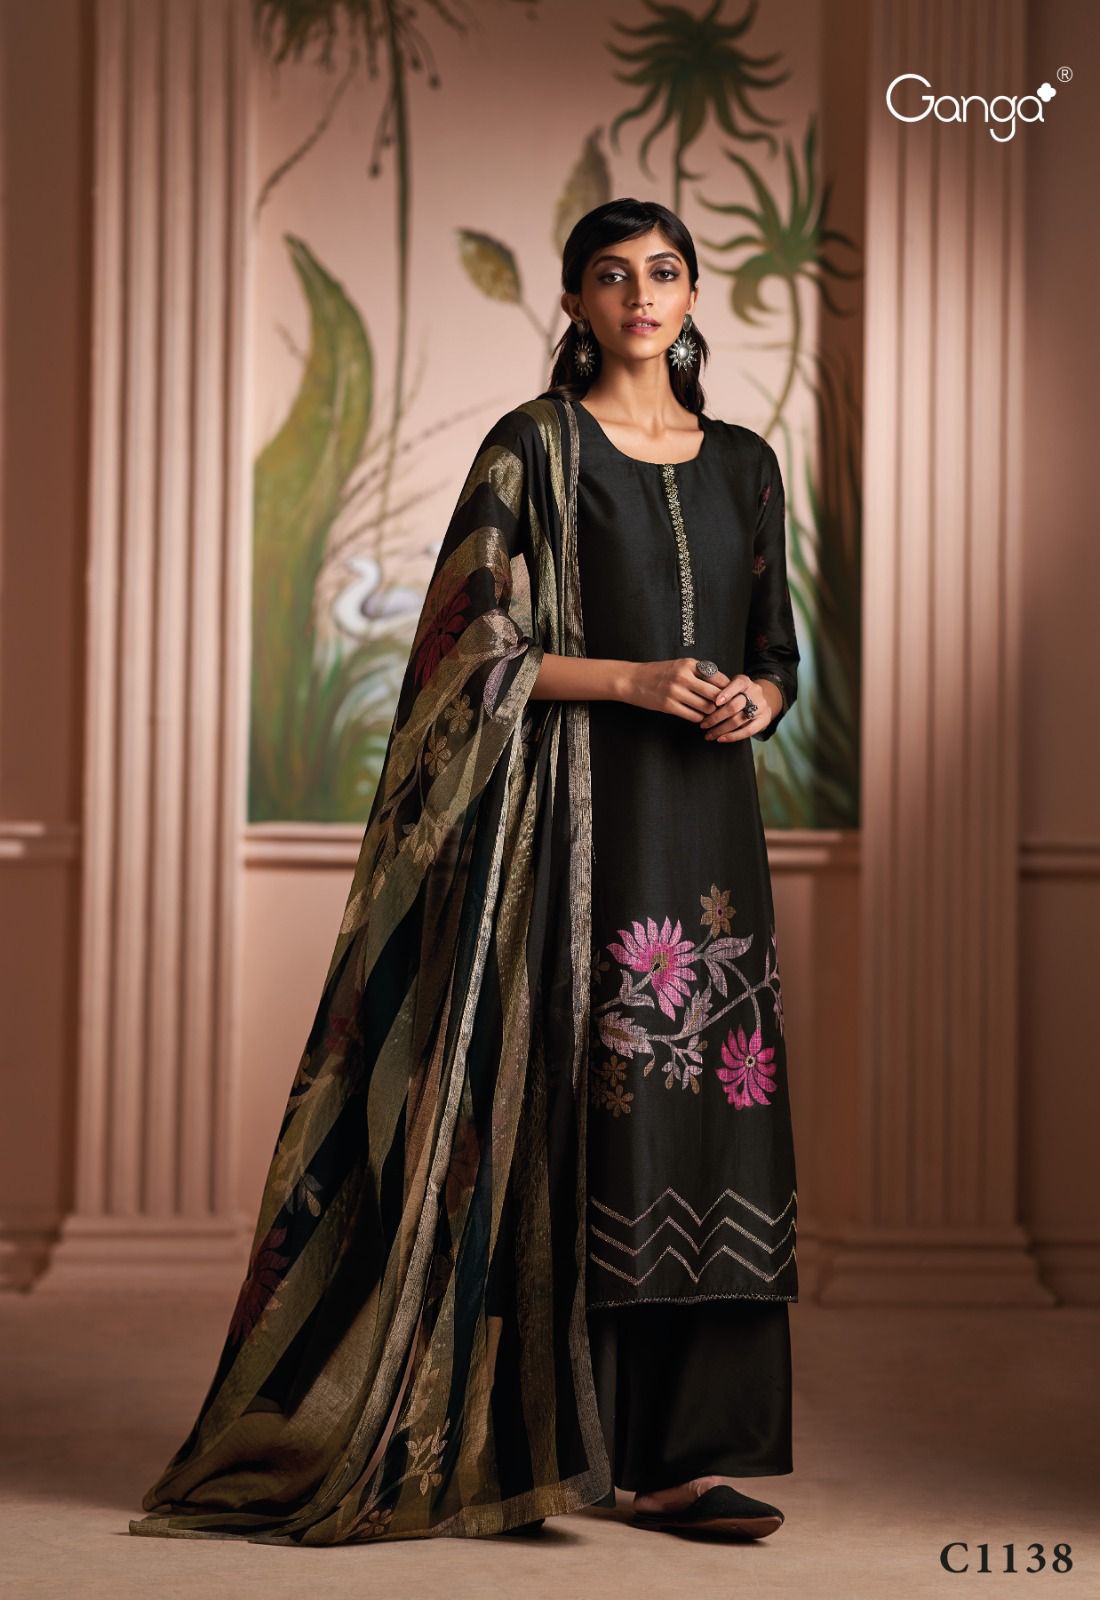 Shanaya Black Ganga Russian Silk Plazzo Style Suits